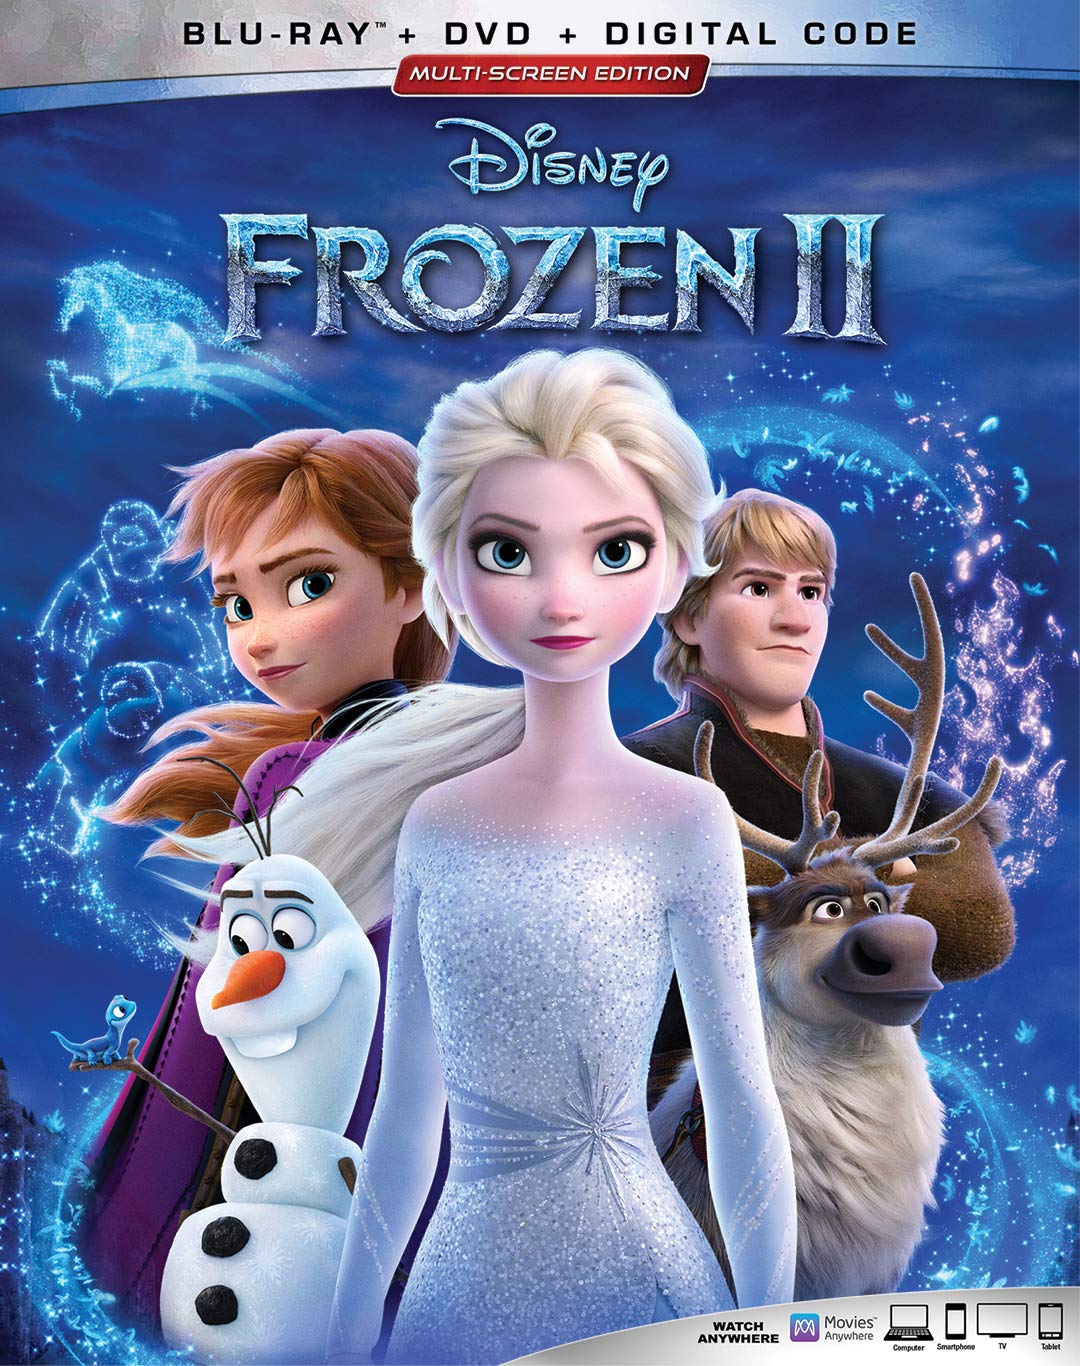 Stiahni si Filmy Kreslené Ledove kralovstvi II / Frozen II (2019)(SK/CZ/EN)[1080p] = CSFD 72%